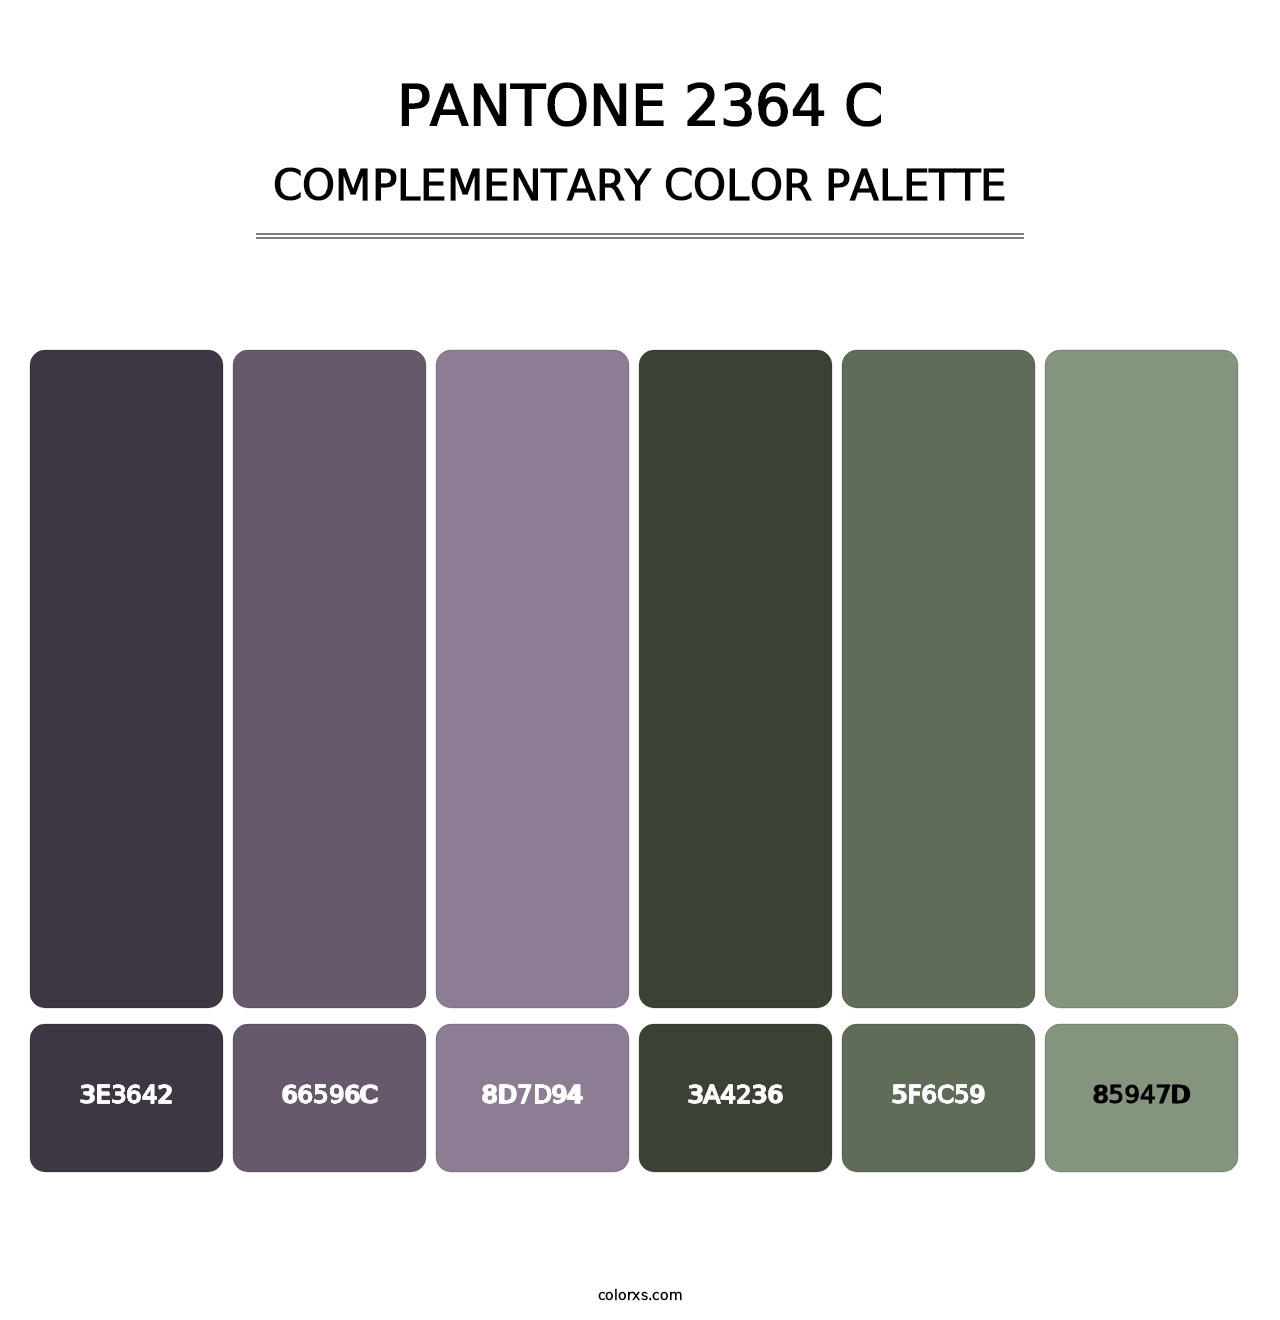 PANTONE 2364 C - Complementary Color Palette